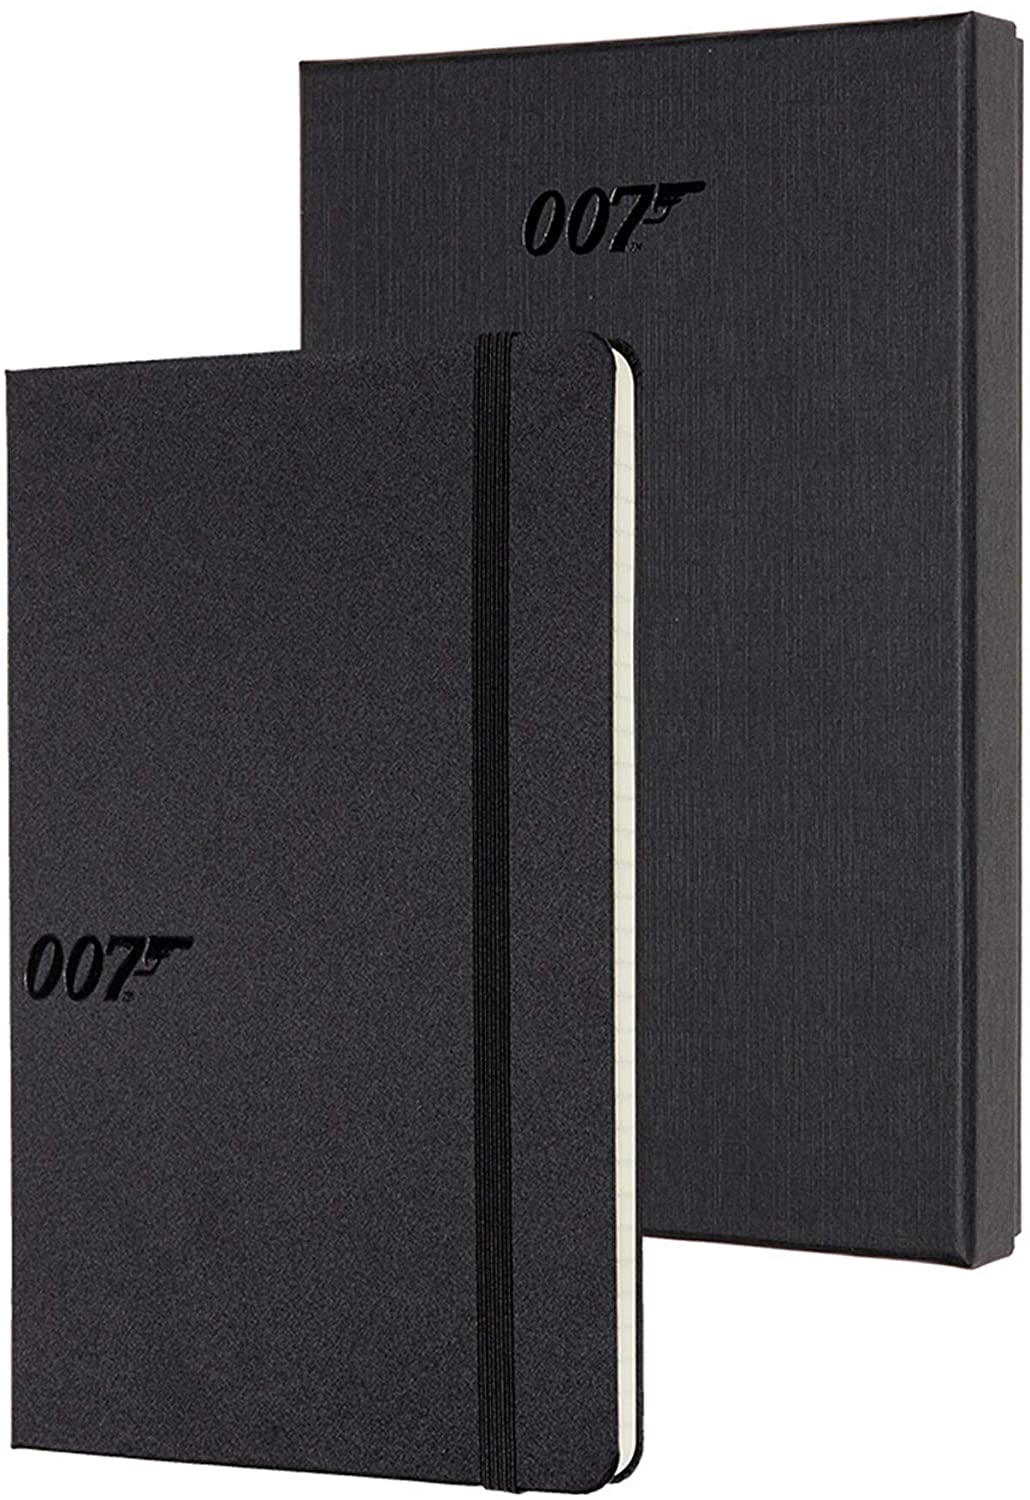 Carnet - Moleskine Limited Edition Notebook, James Bond, Collectors Box, Large, Ruled, Hard Cover | Moleskine